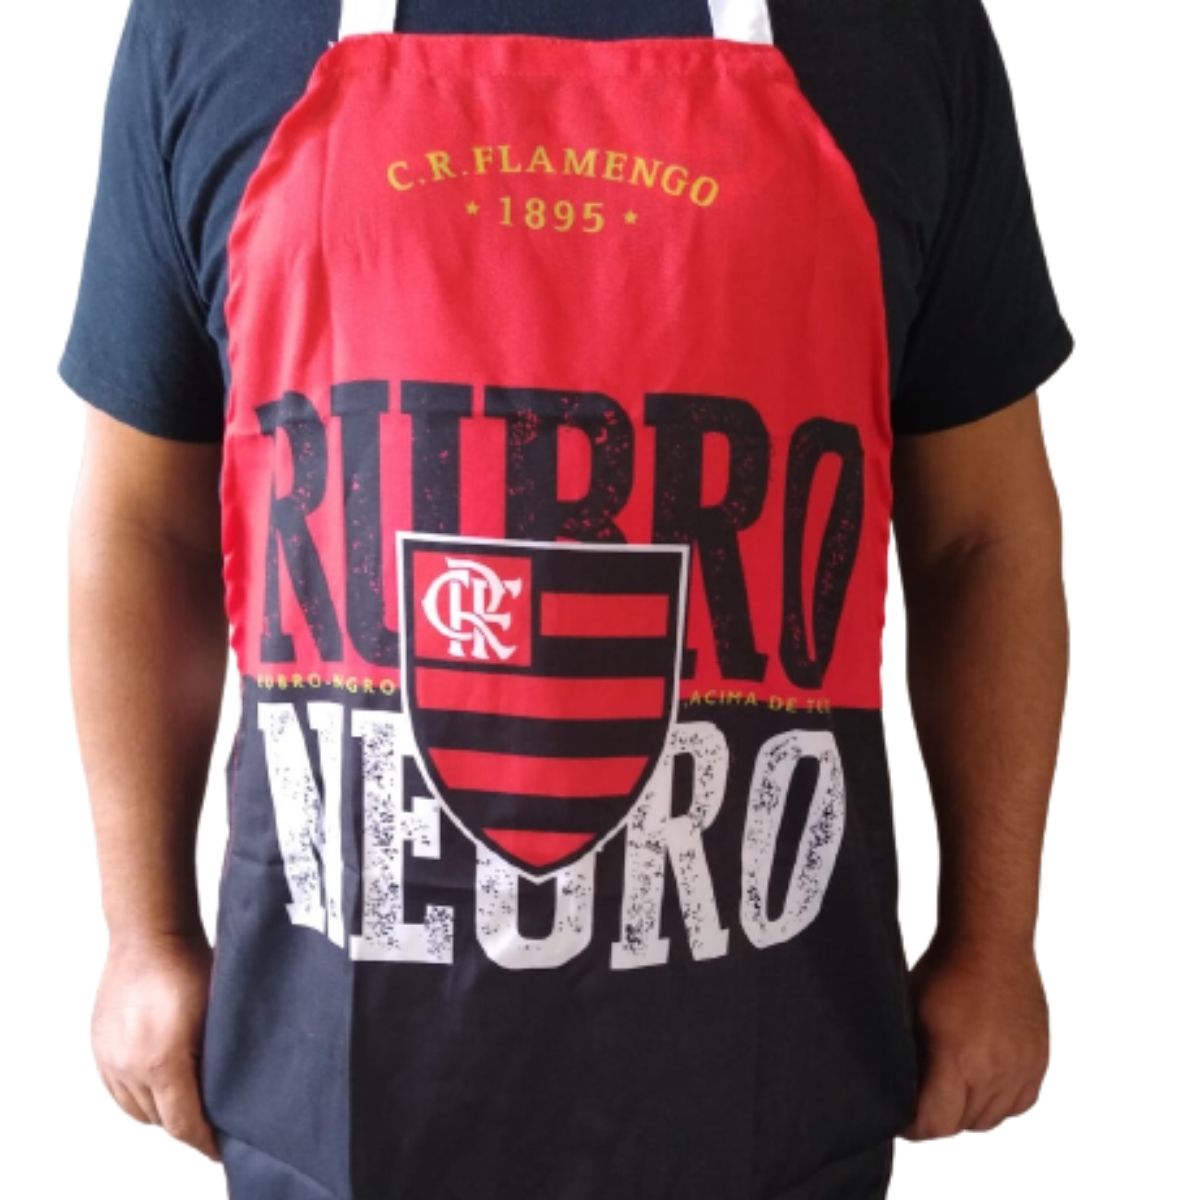 Kit Churrasqueiro Flamengo Avental e Taça Presente Brasfoot